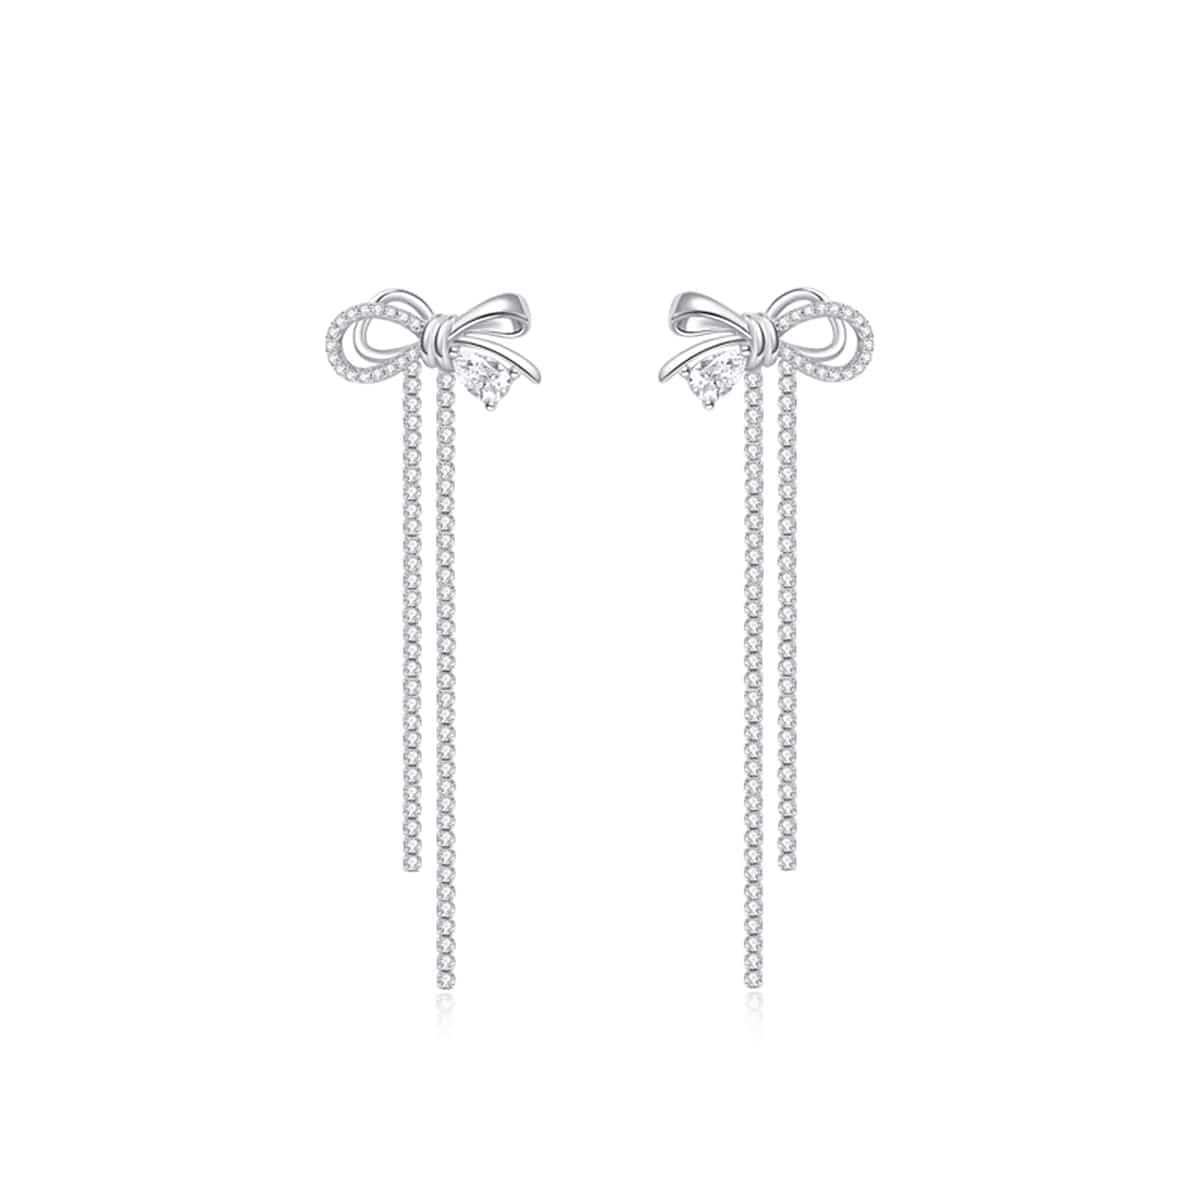 FANCIME "Satin Bow" Dangling Sterling Silver Earrings Main